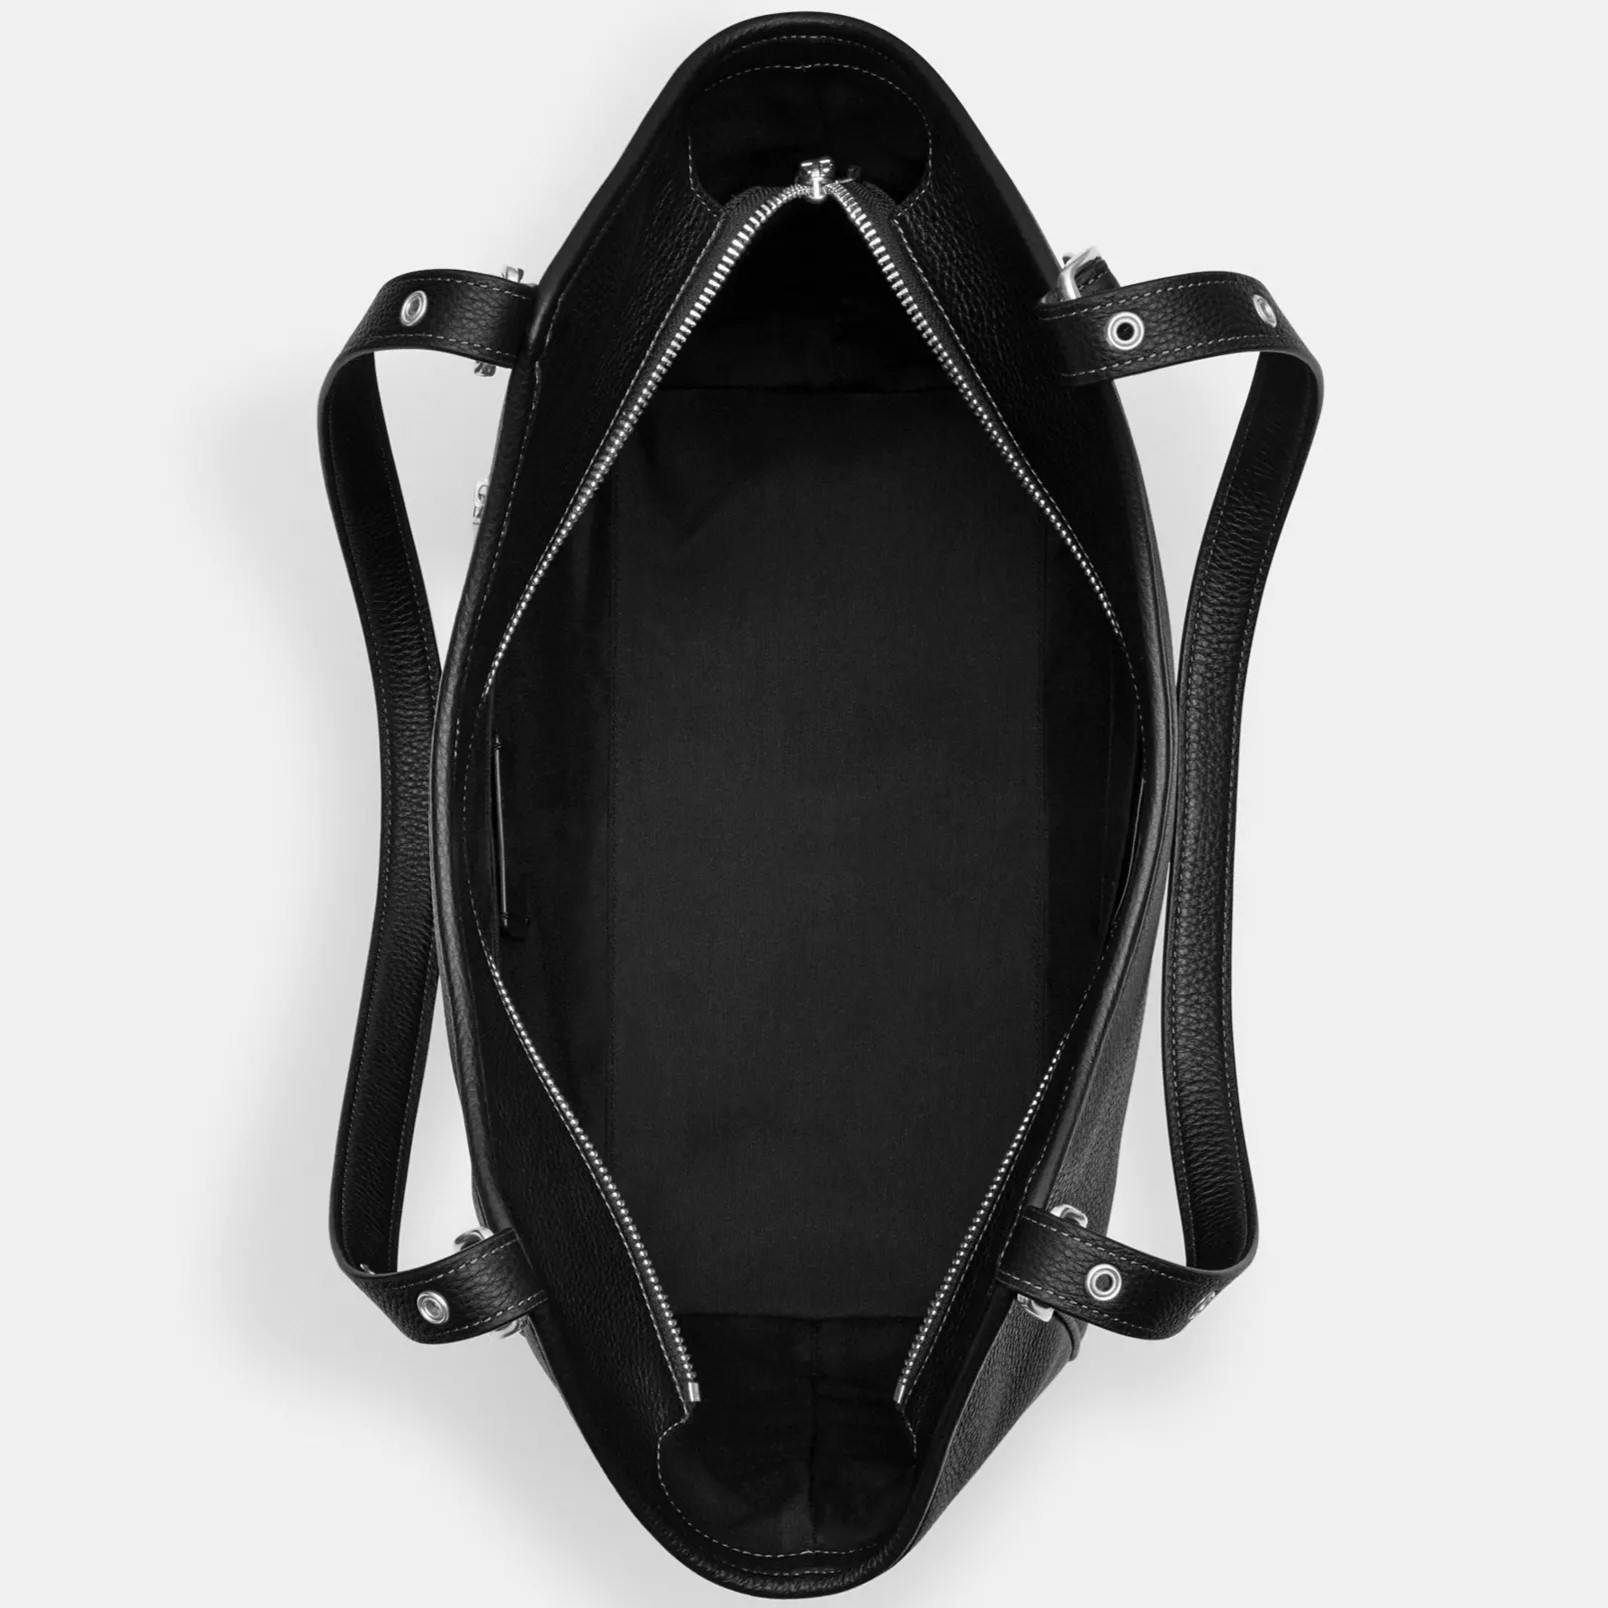 TÚI COACH NỮ MEADOW SHOULDER BAG REFINED PEBBLE LEATHER SILVER BLACK CM074 4